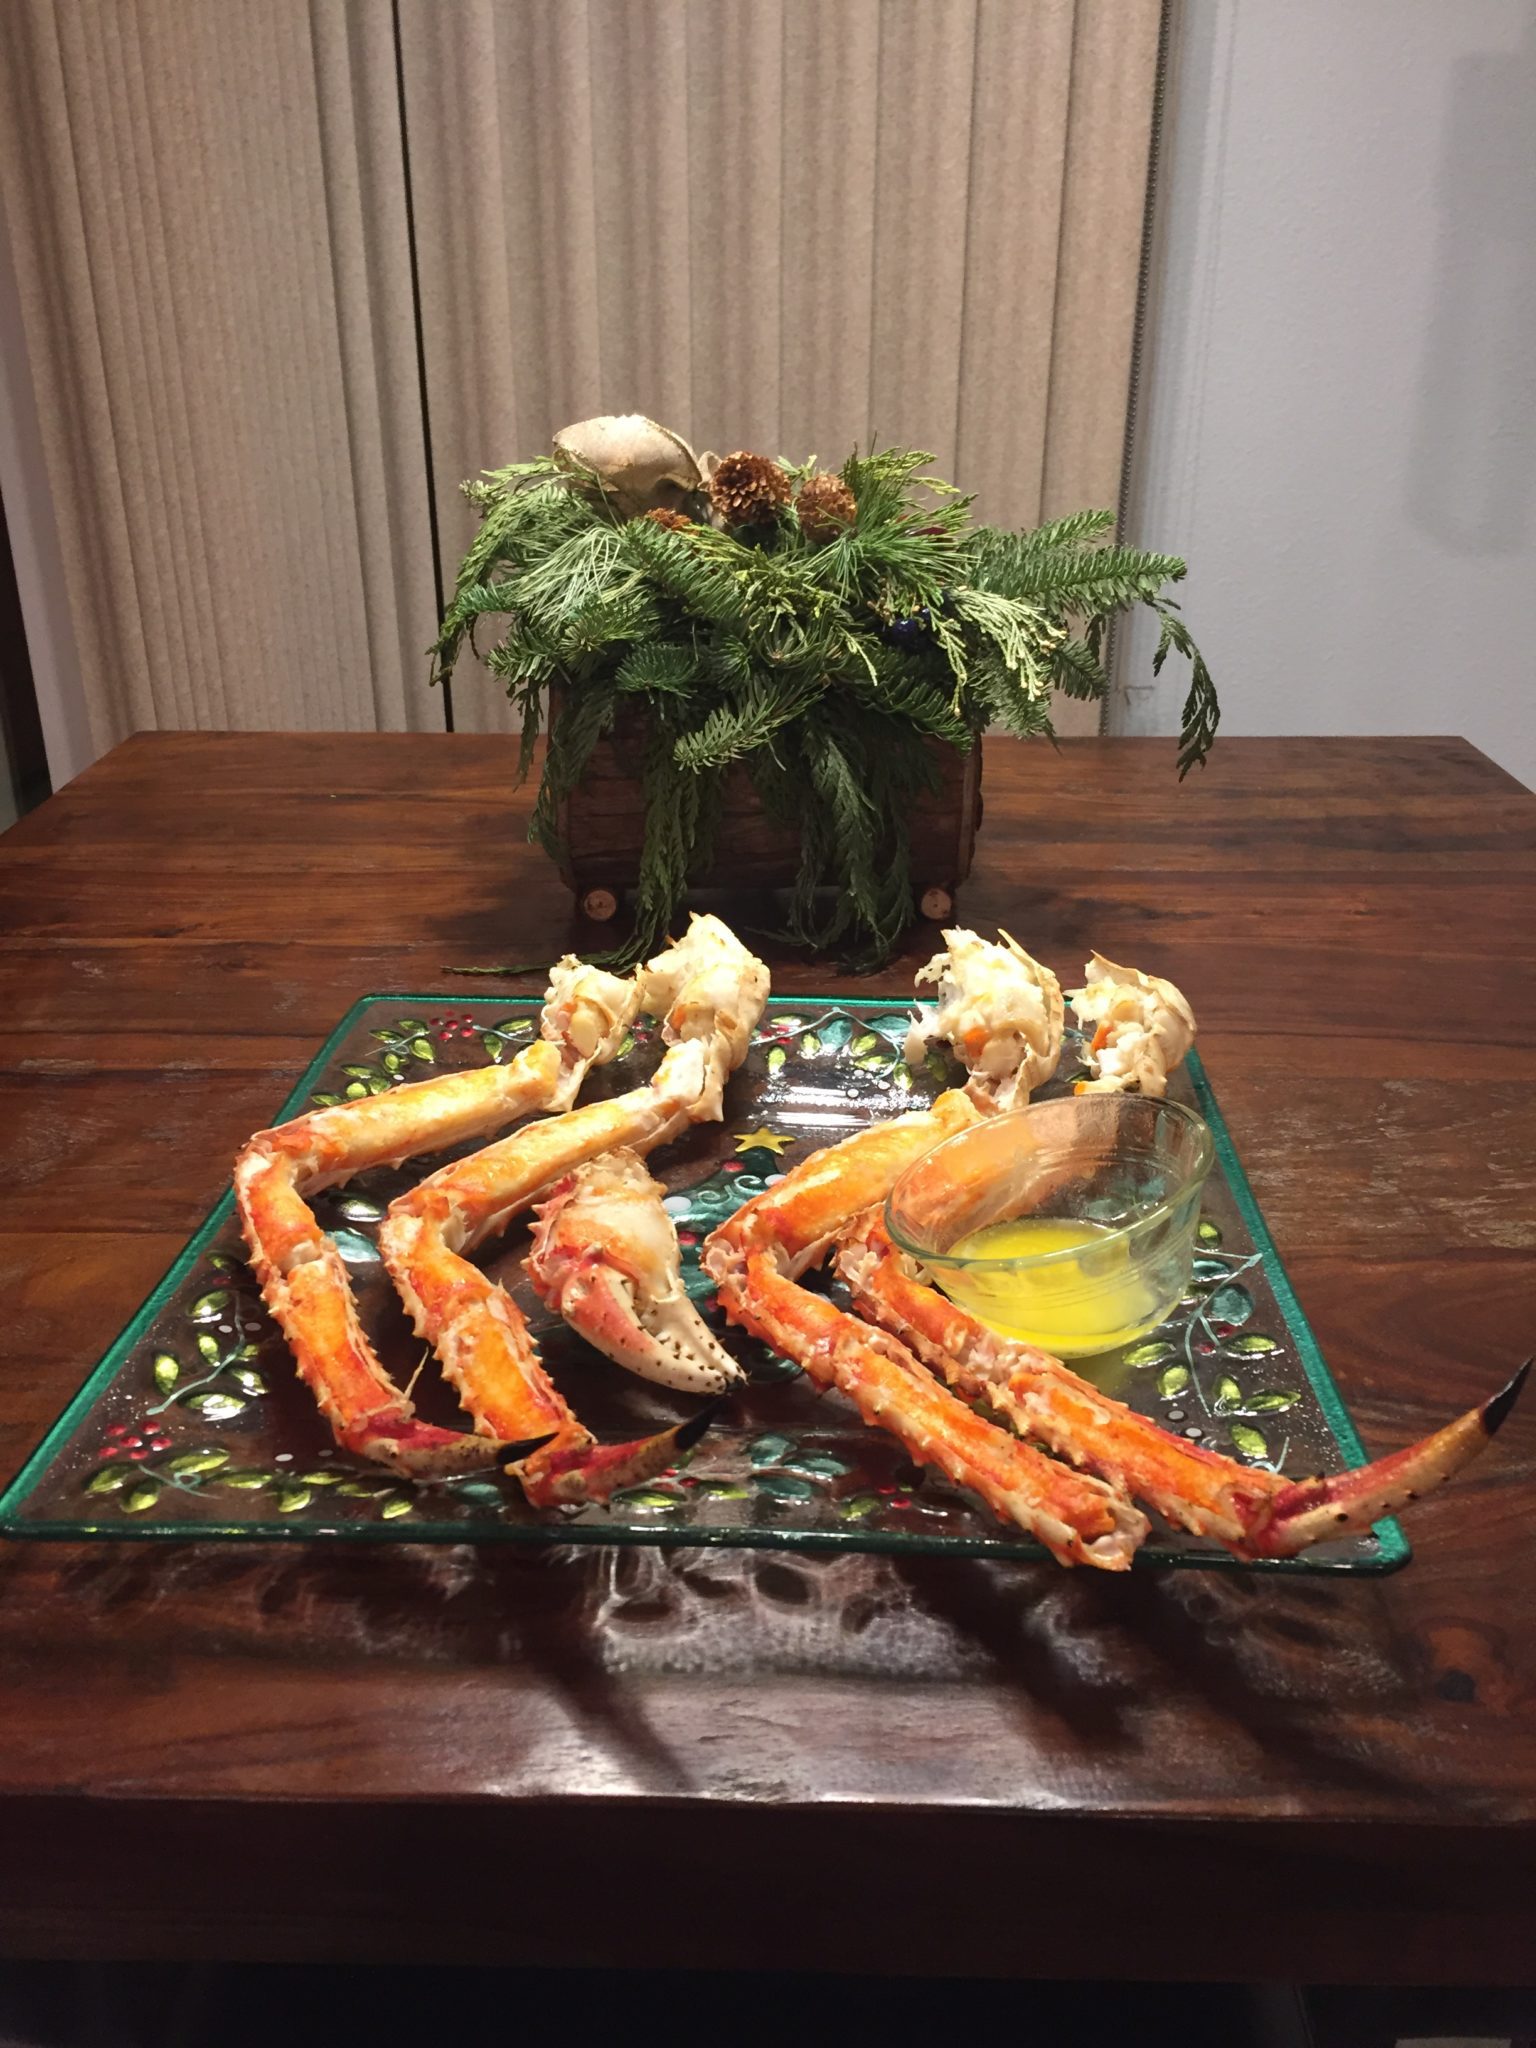 Alaska King Crab Recipe How To Prepare Alaska King Crab for Dinner